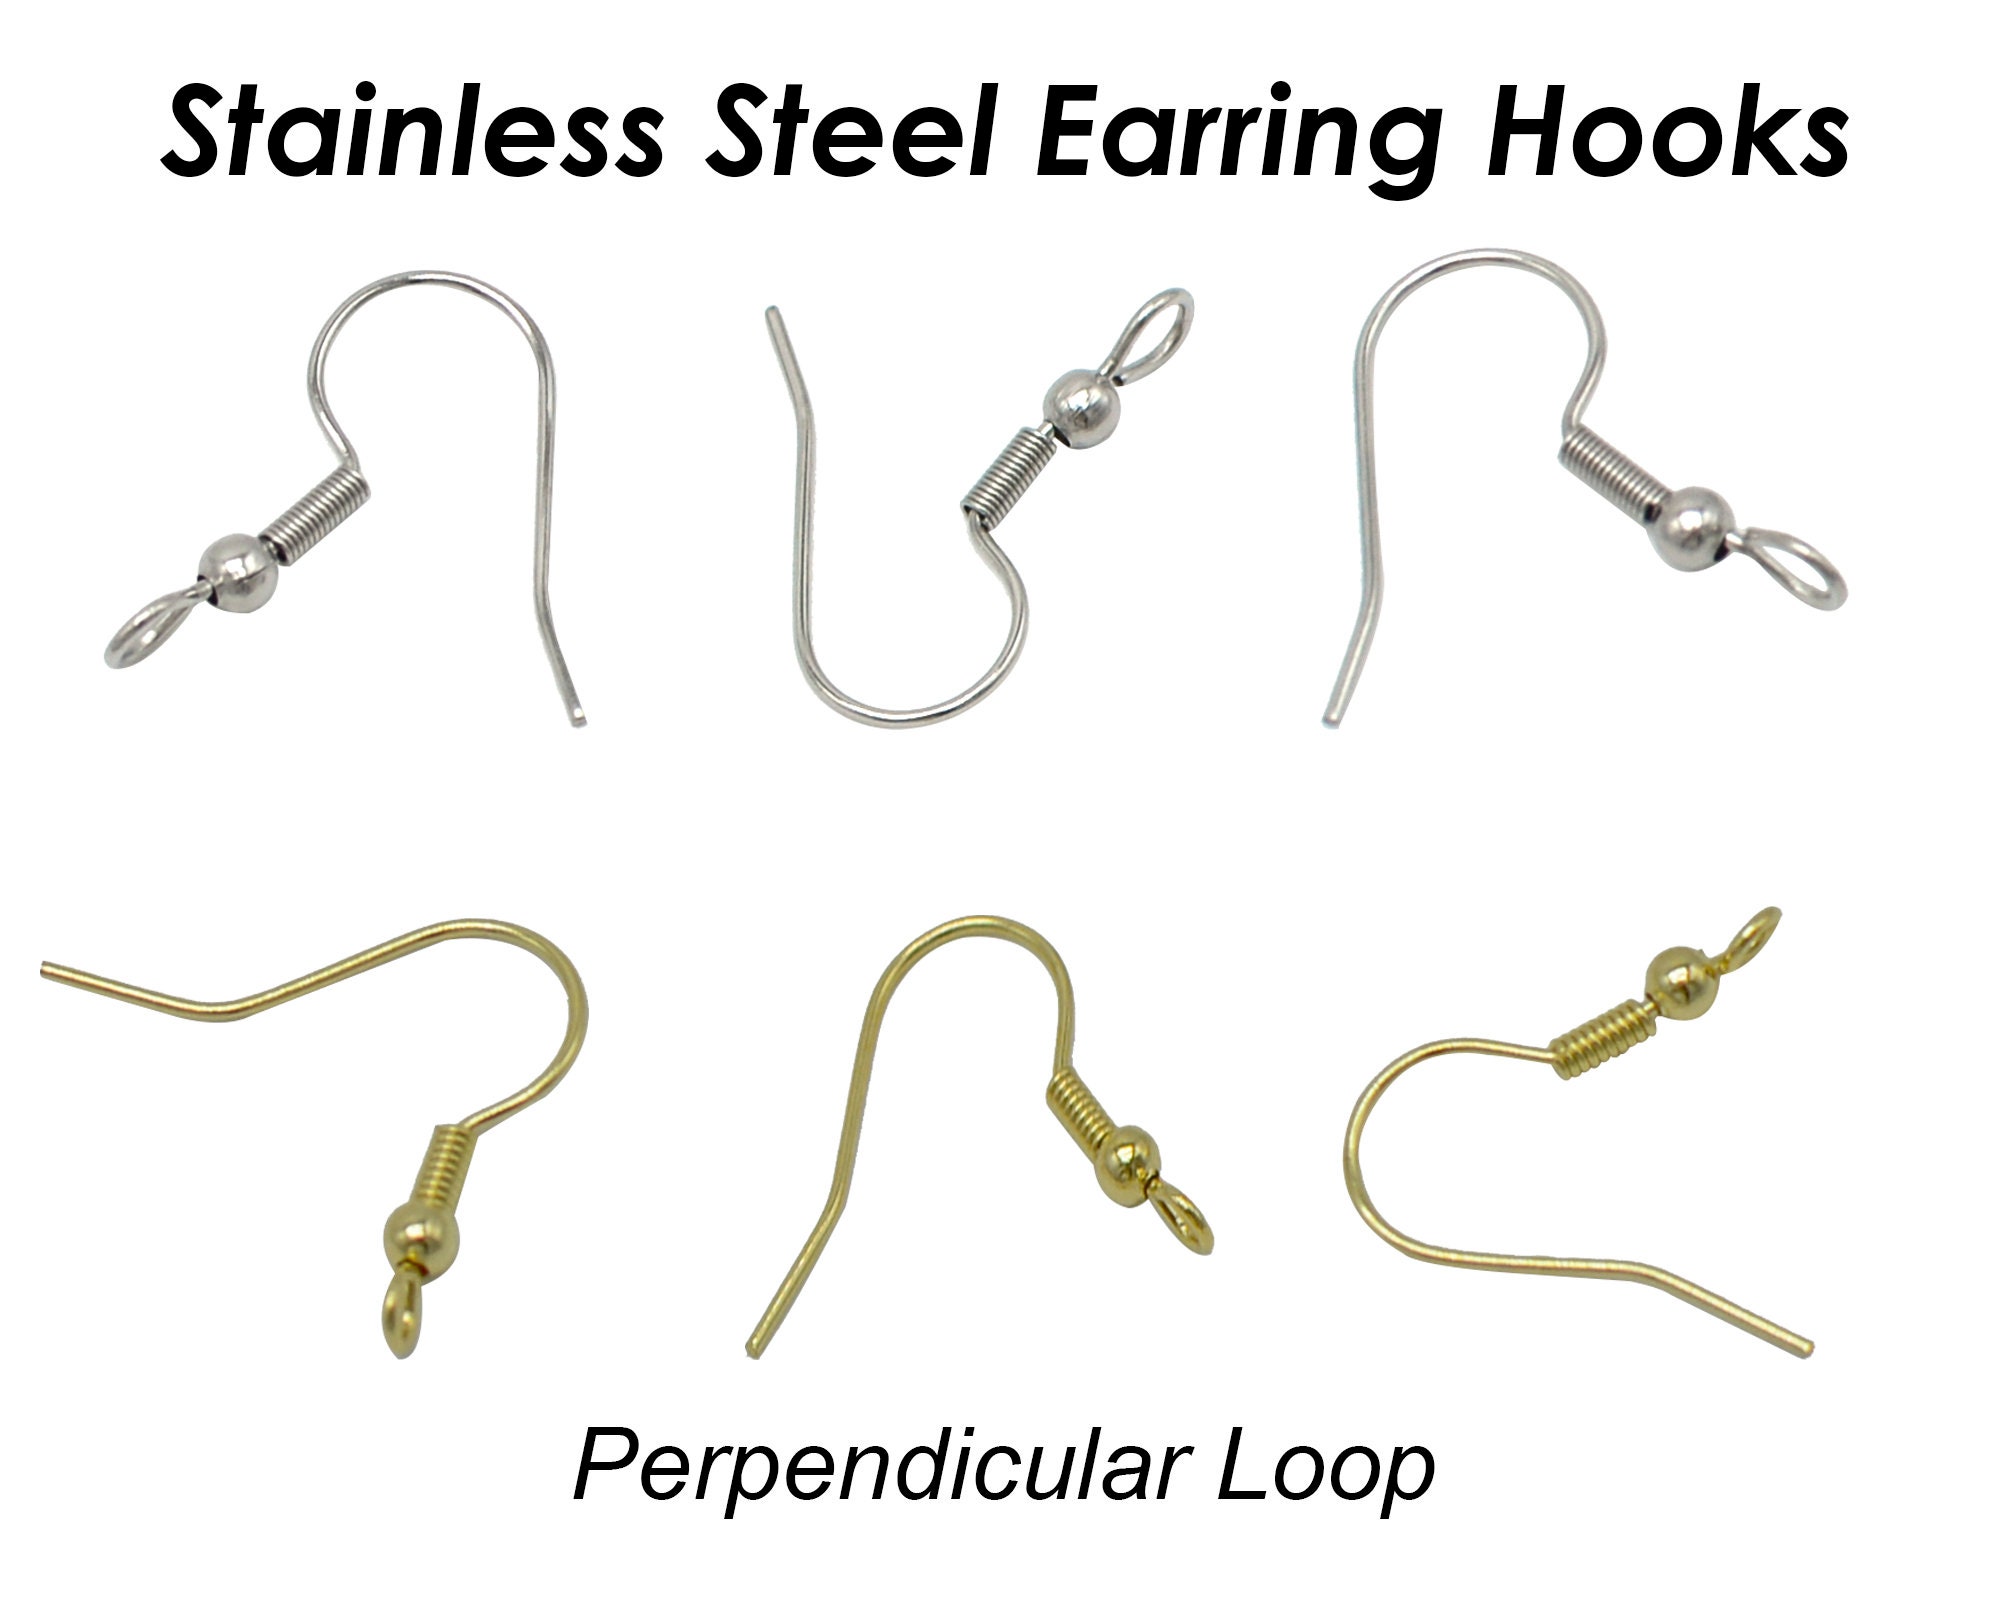 Earring Hooks With Perpendicular Loop -  Canada